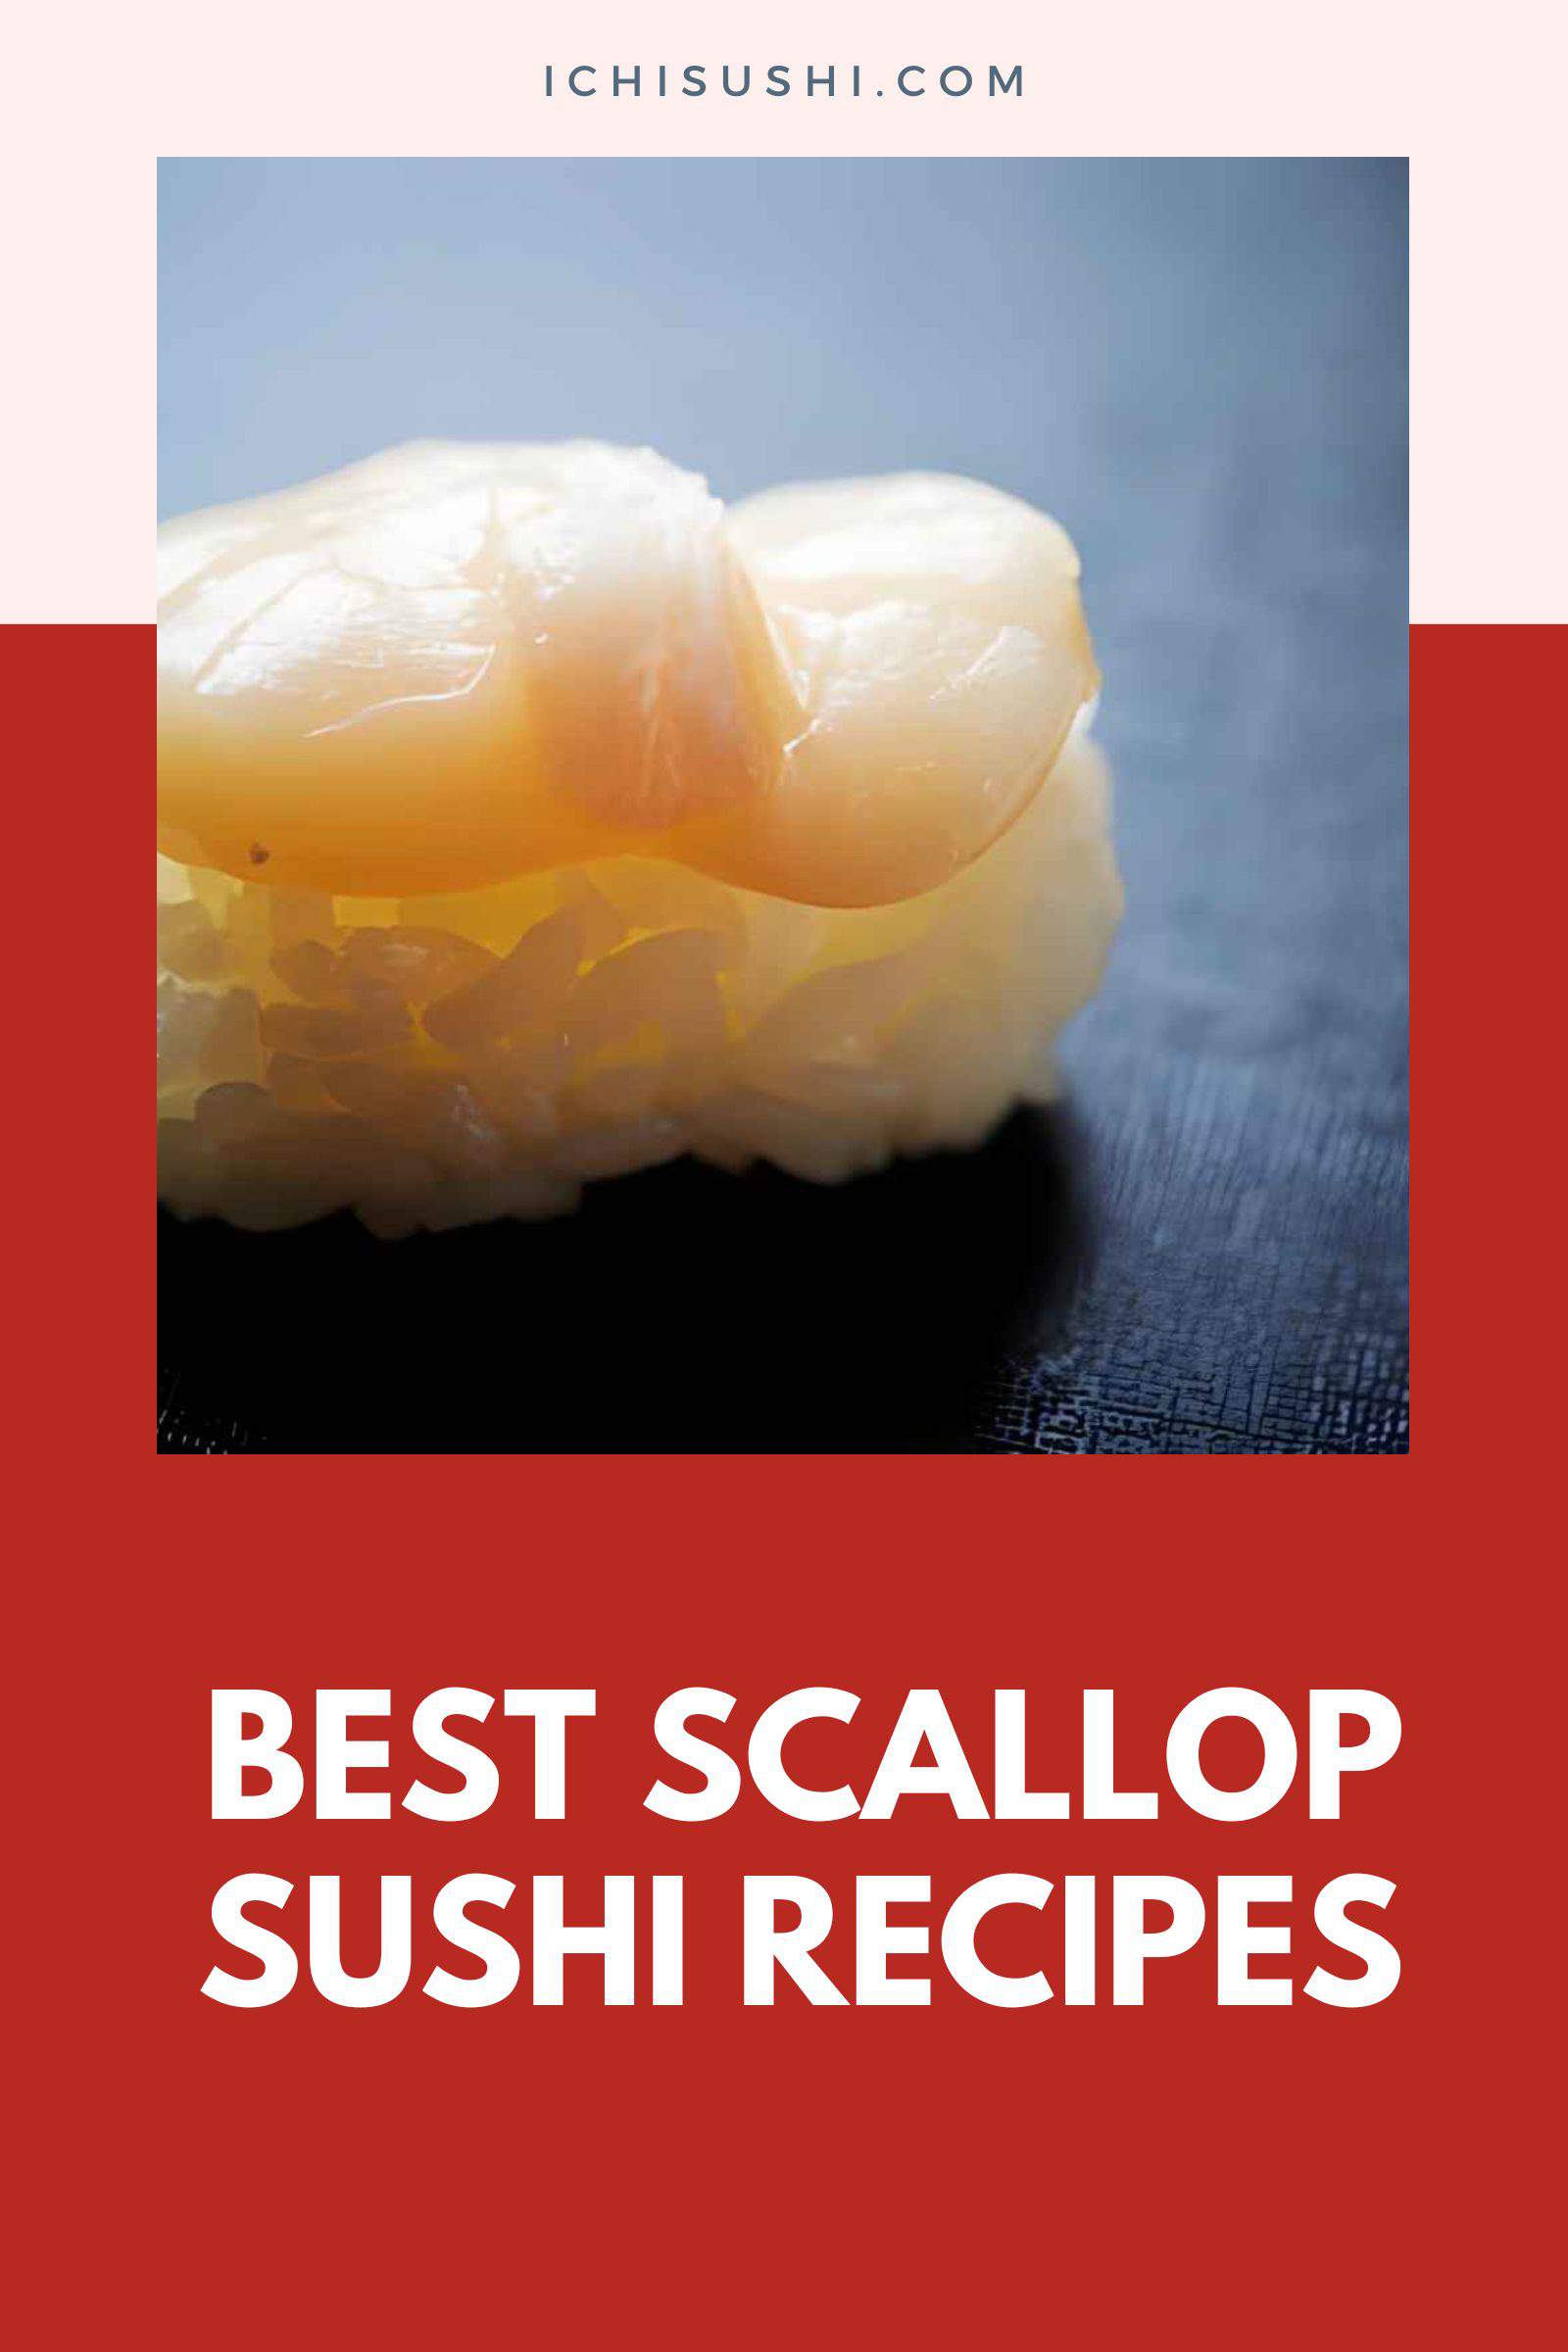 Best Scallop Sushi Recipes